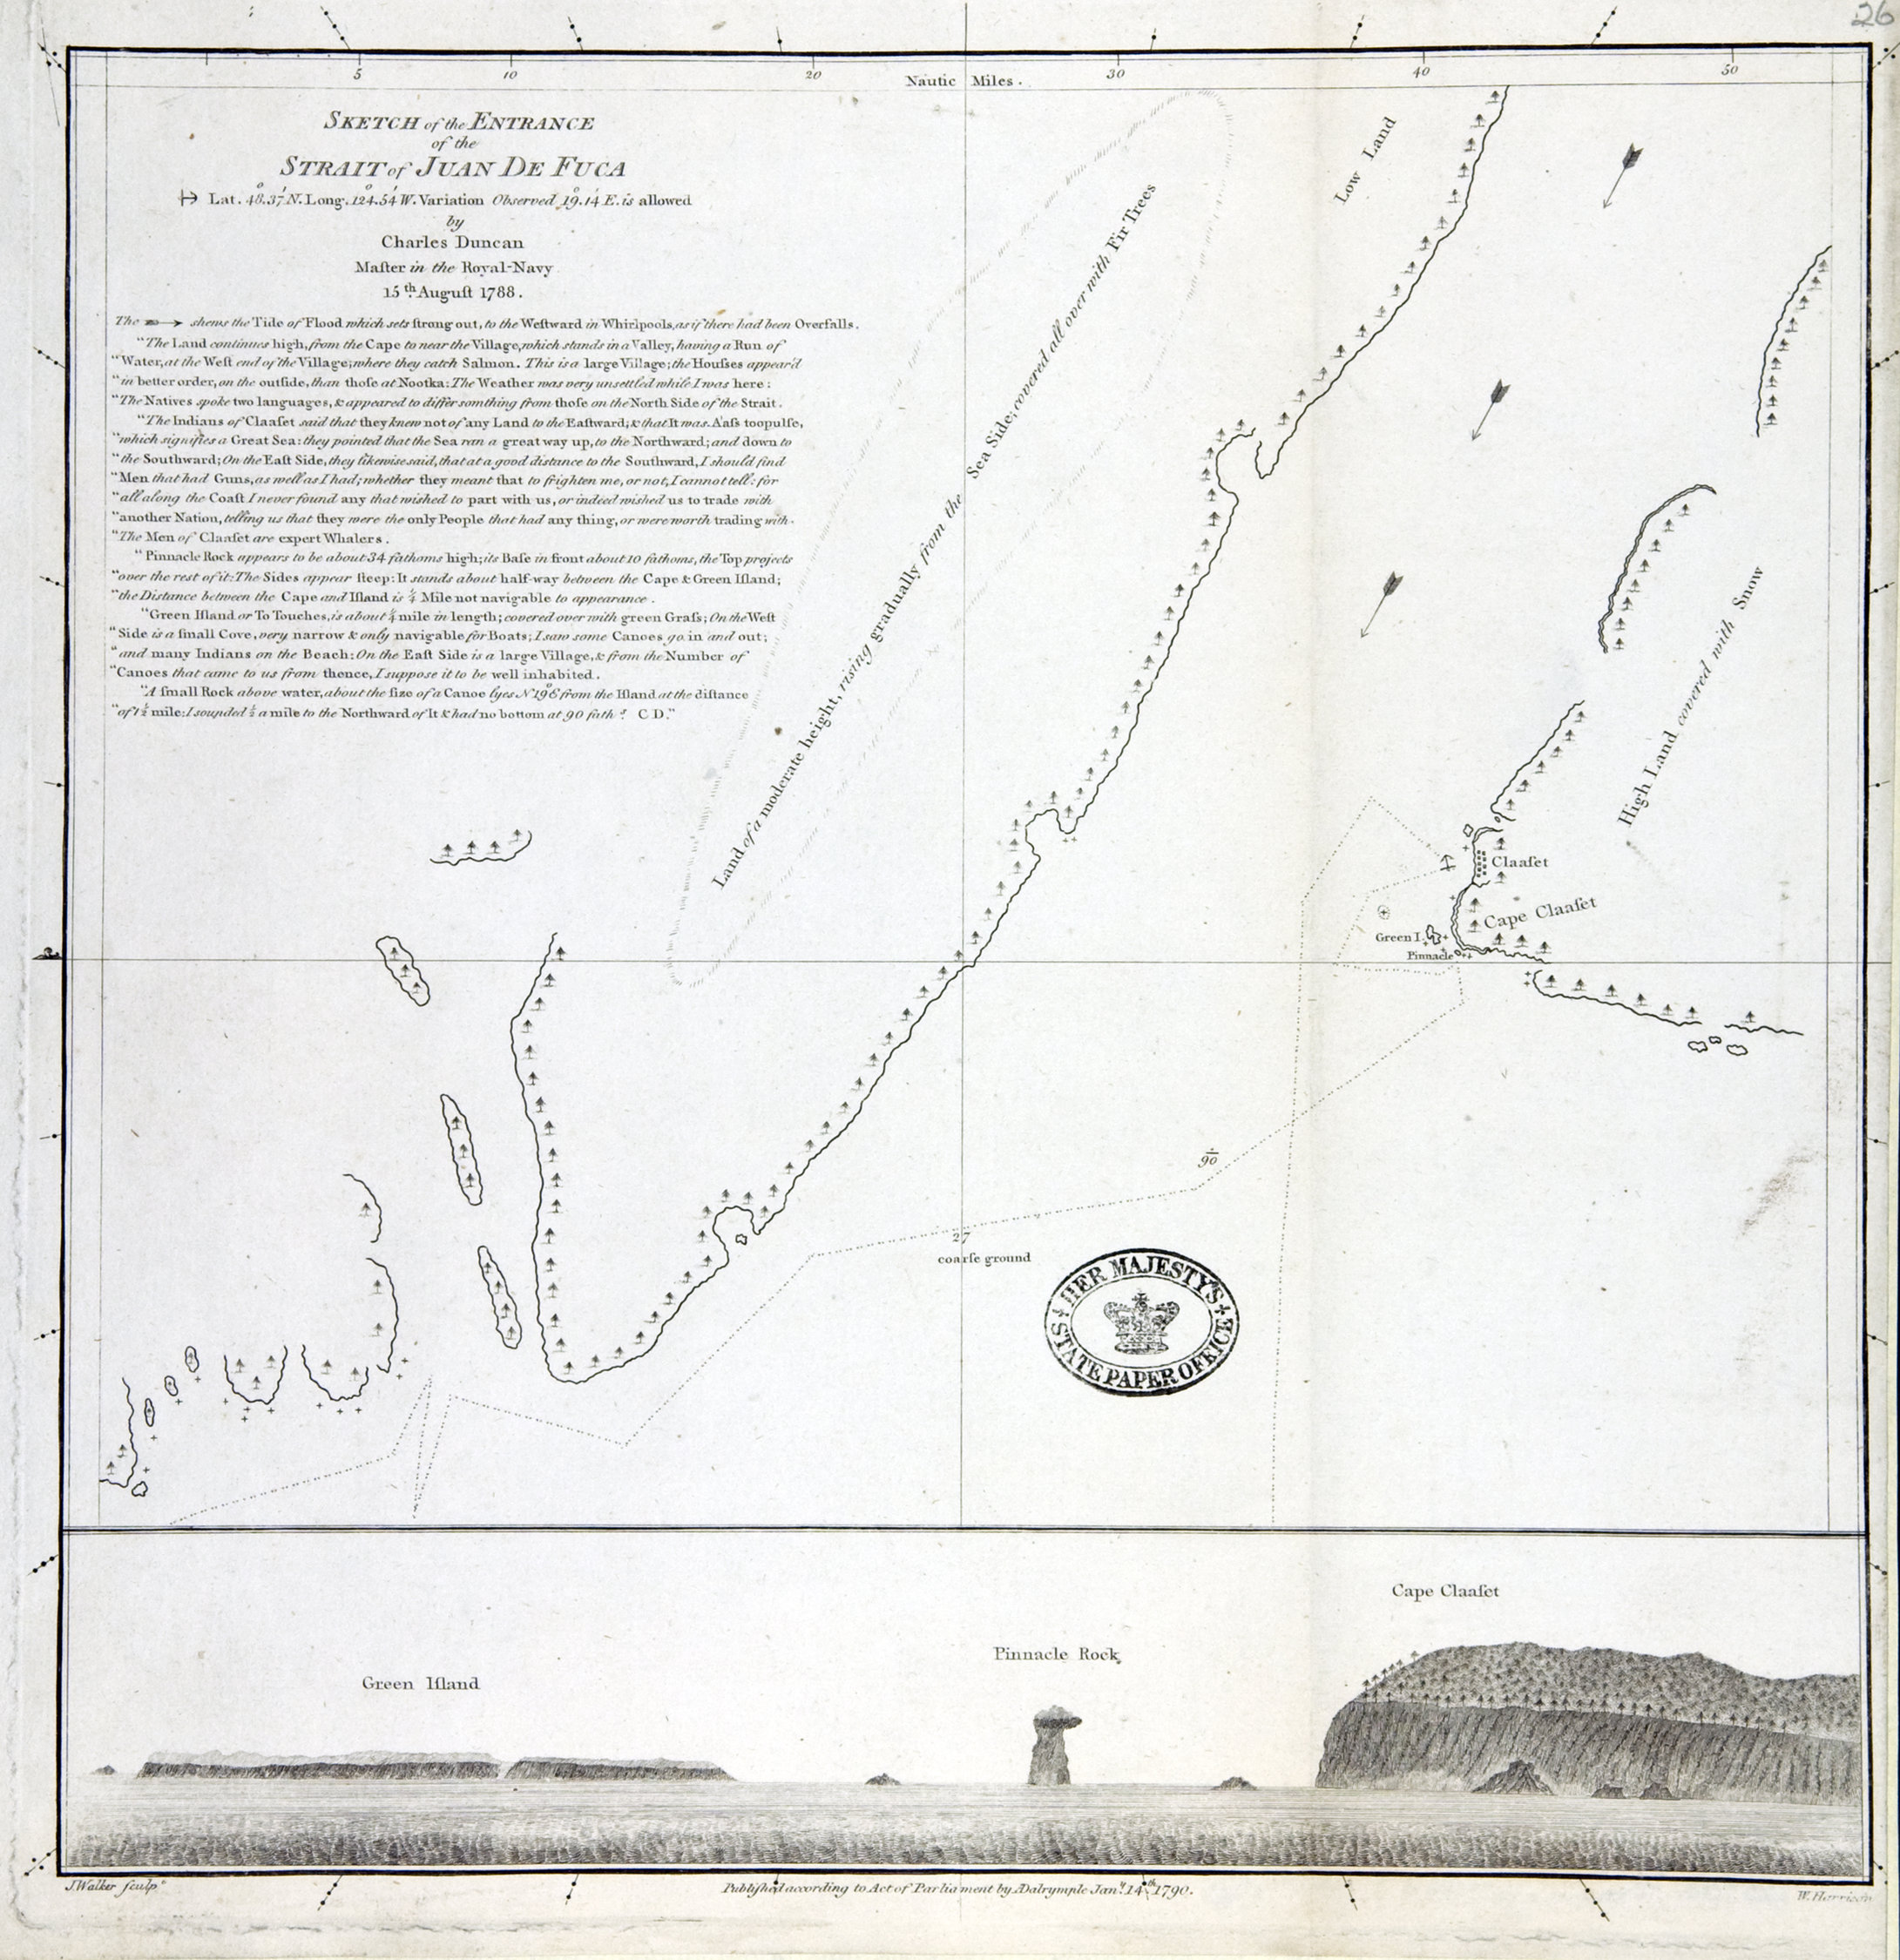 Sketch of the entrance of the Strait of Juan de Fuca : Lat. 48 37' N. Long. 124 54' W. : Variation observed 19